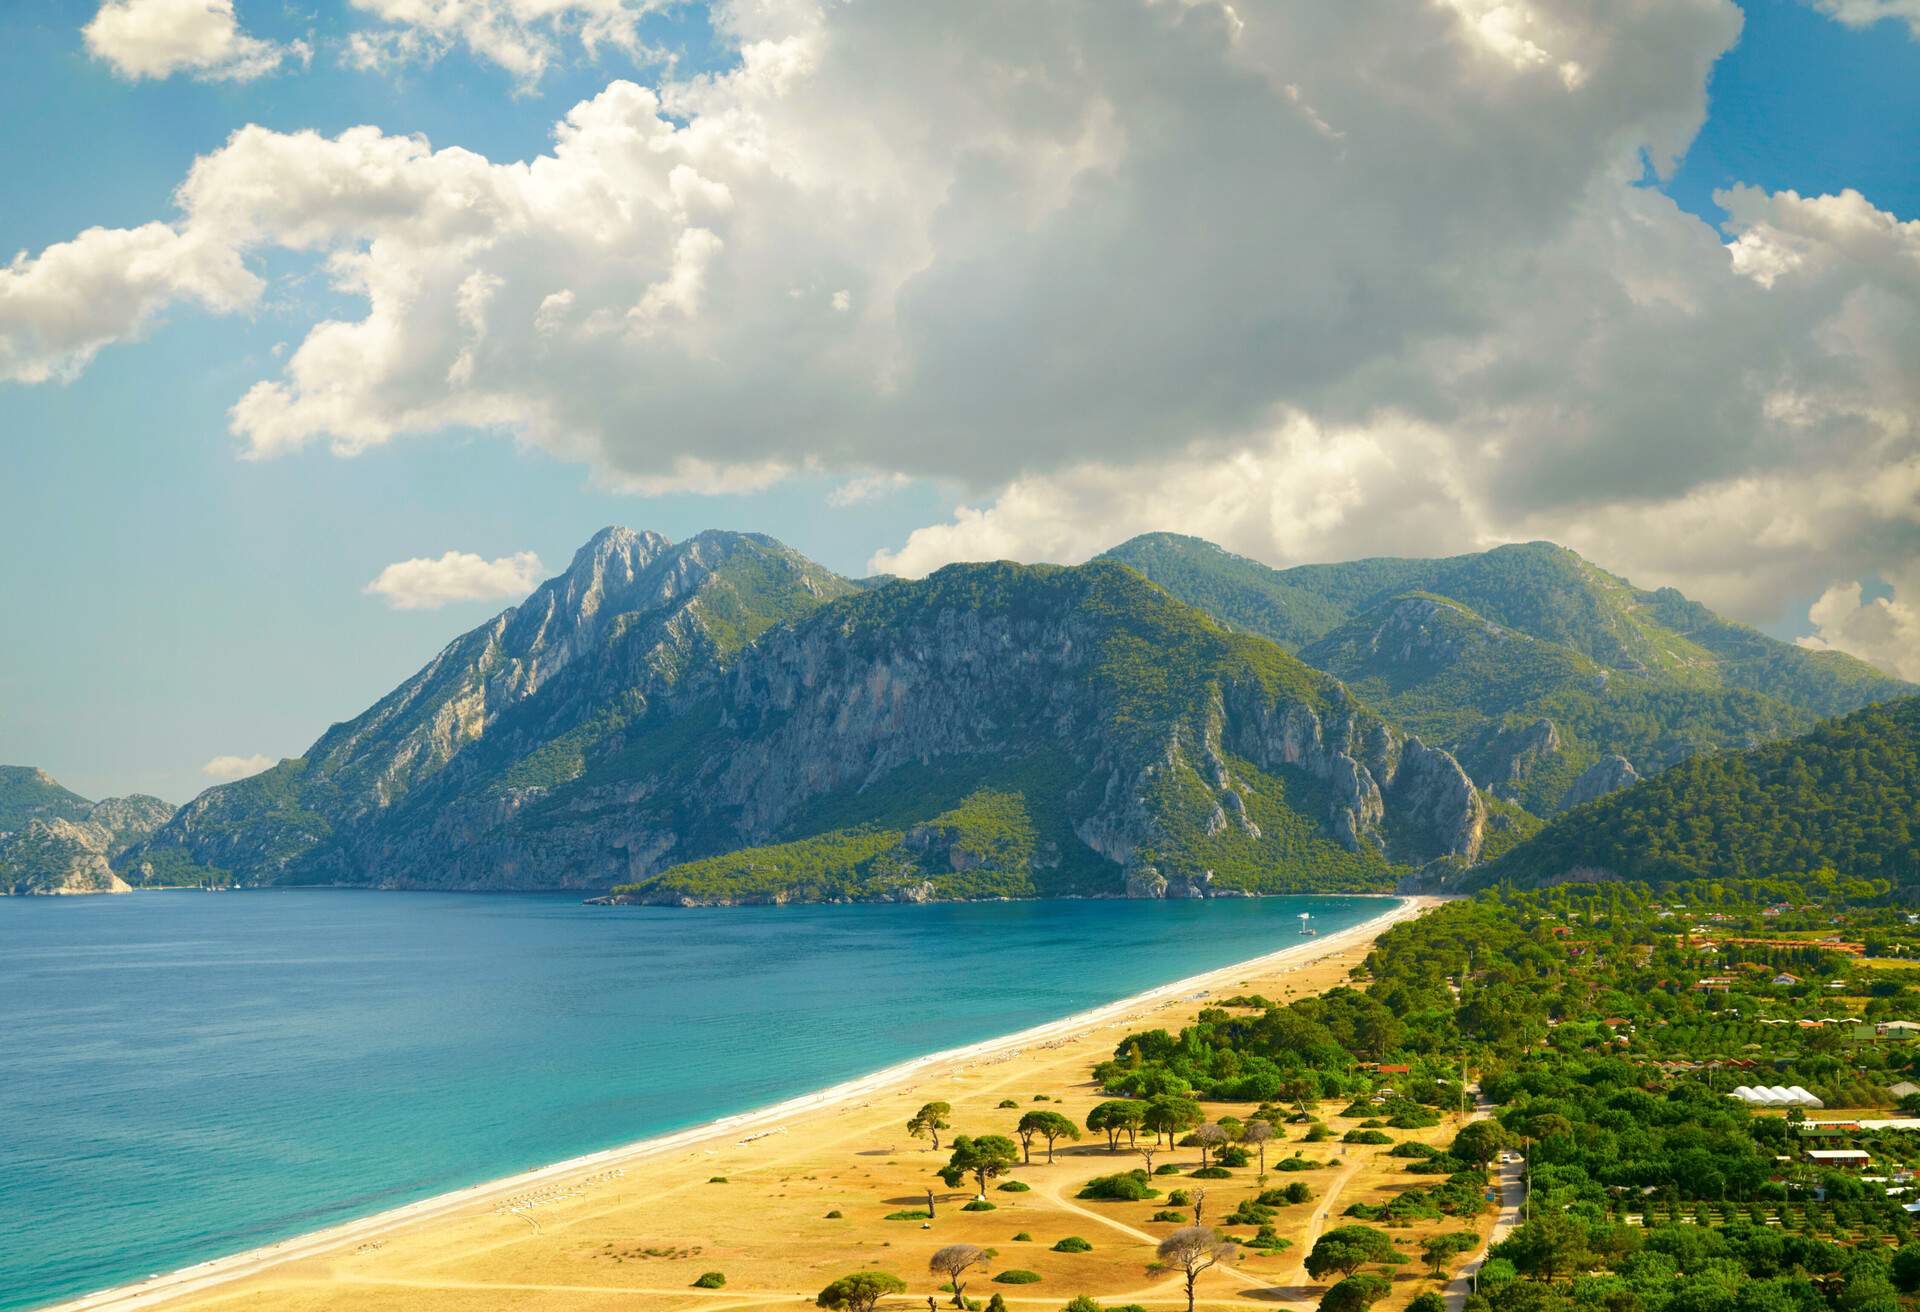 Beach at Mediterranean sea. Cirali, Turkey